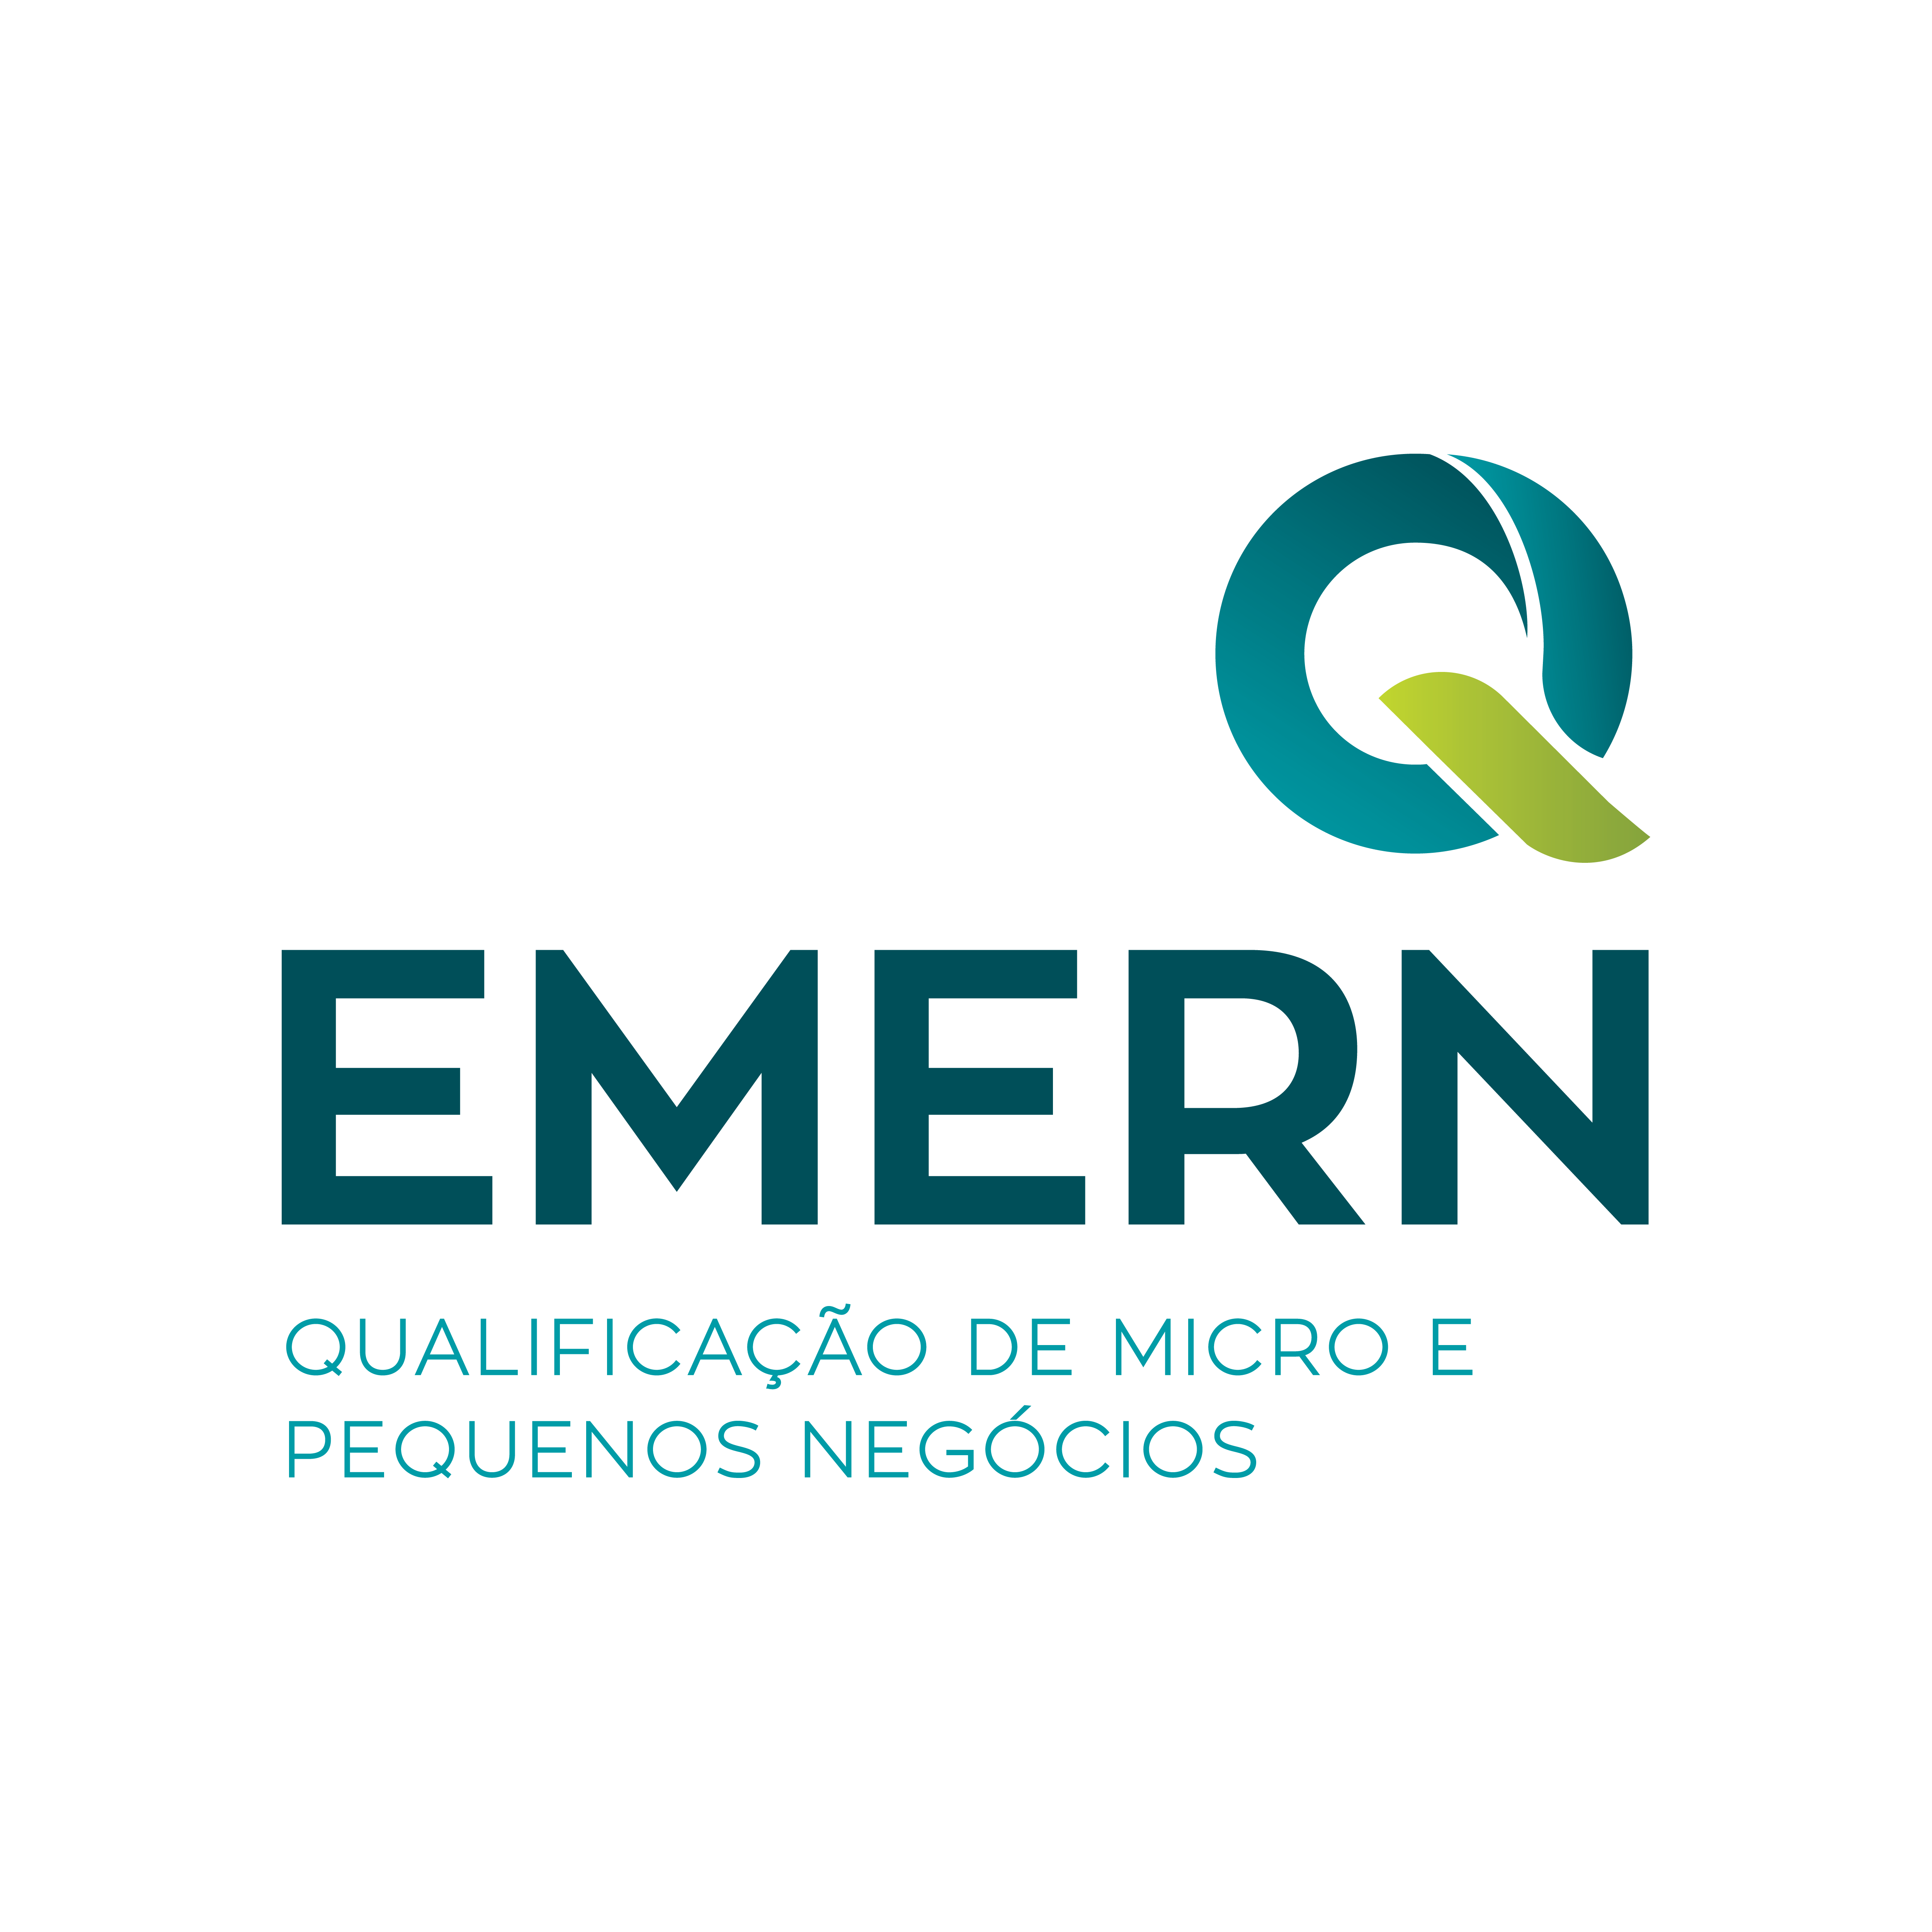 EMERN-Q